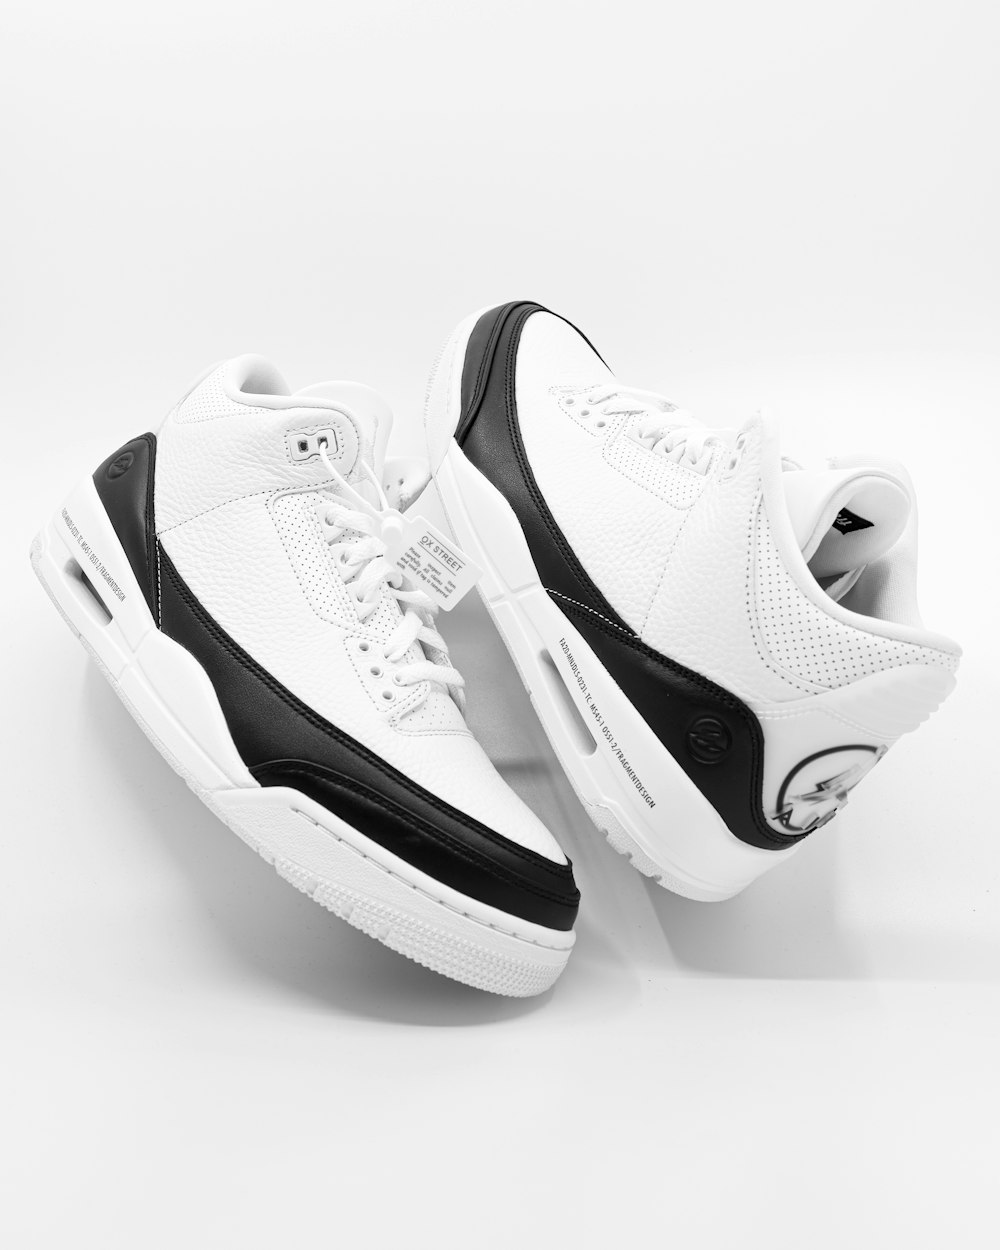 Foto Nike air jordan 1 blanco y negro – Imagen Azul gratis en Unsplash